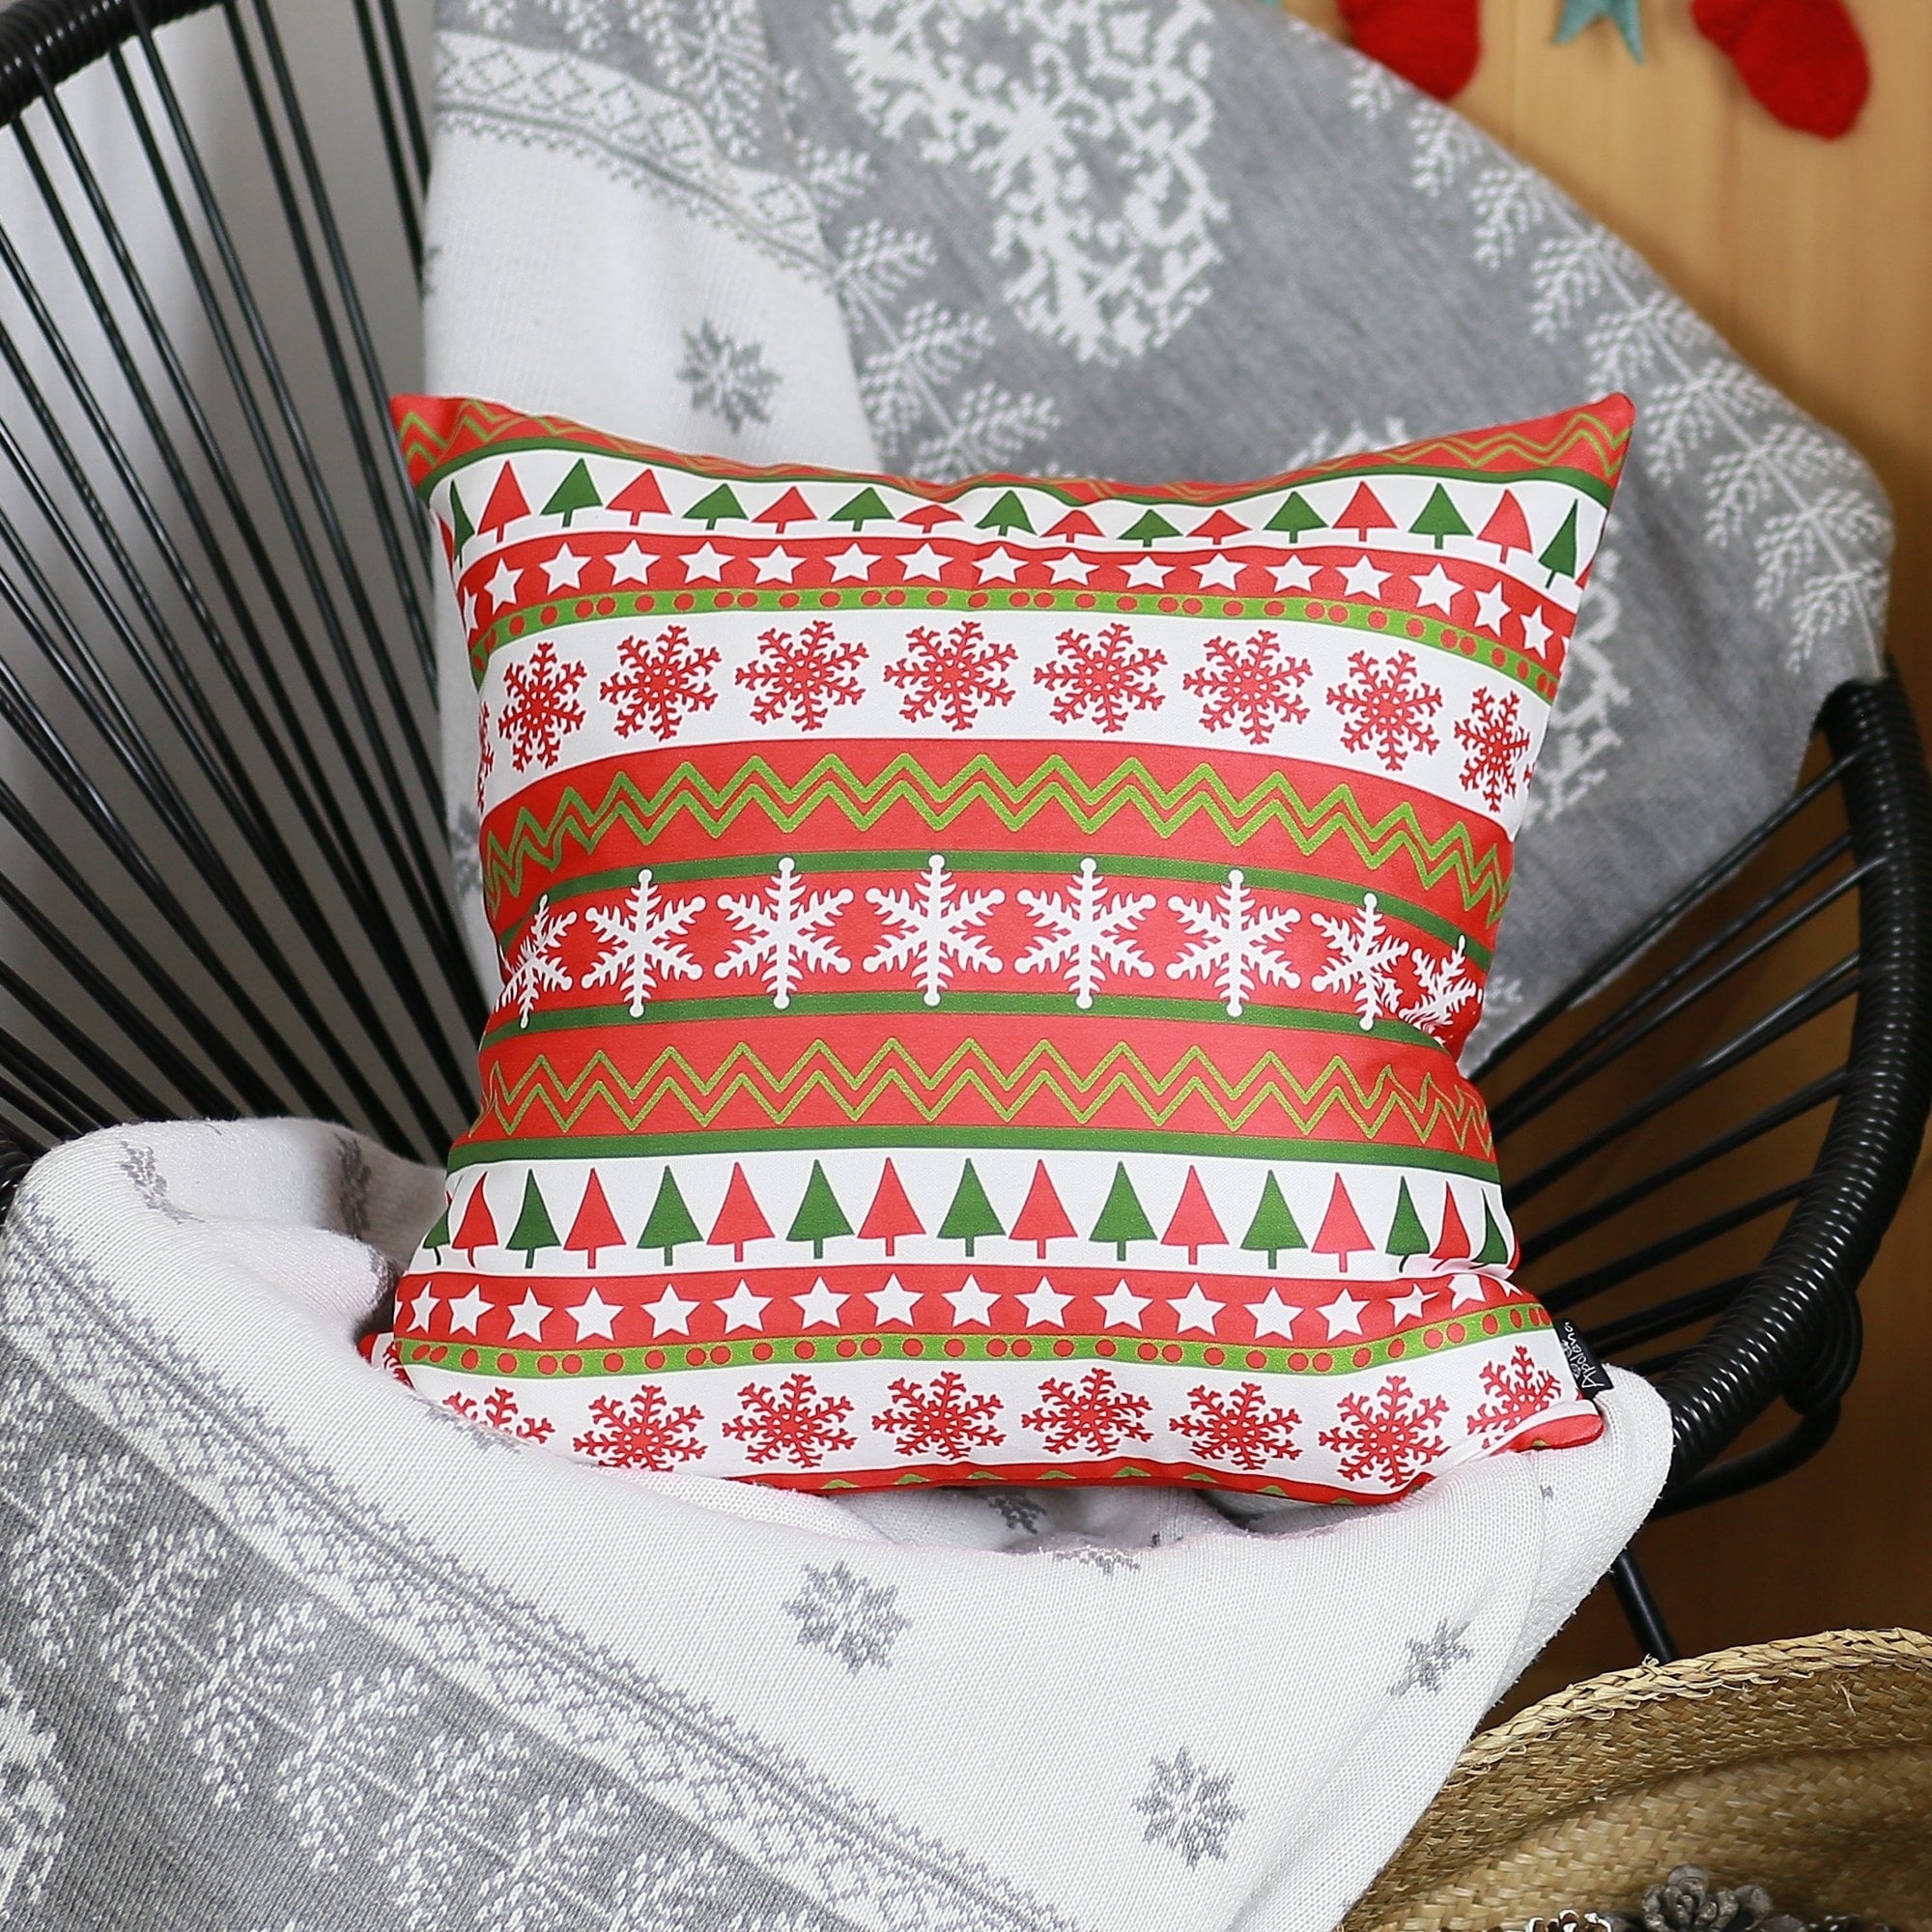 https://ak1.ostkcdn.com/images/products/29348553/Snowflake-Merry-Christmas-Throw-Pillow-Cover-Christmas-Gift-18-x18-f6070f2f-f211-4c9c-bb08-a3139527b1e3.jpg